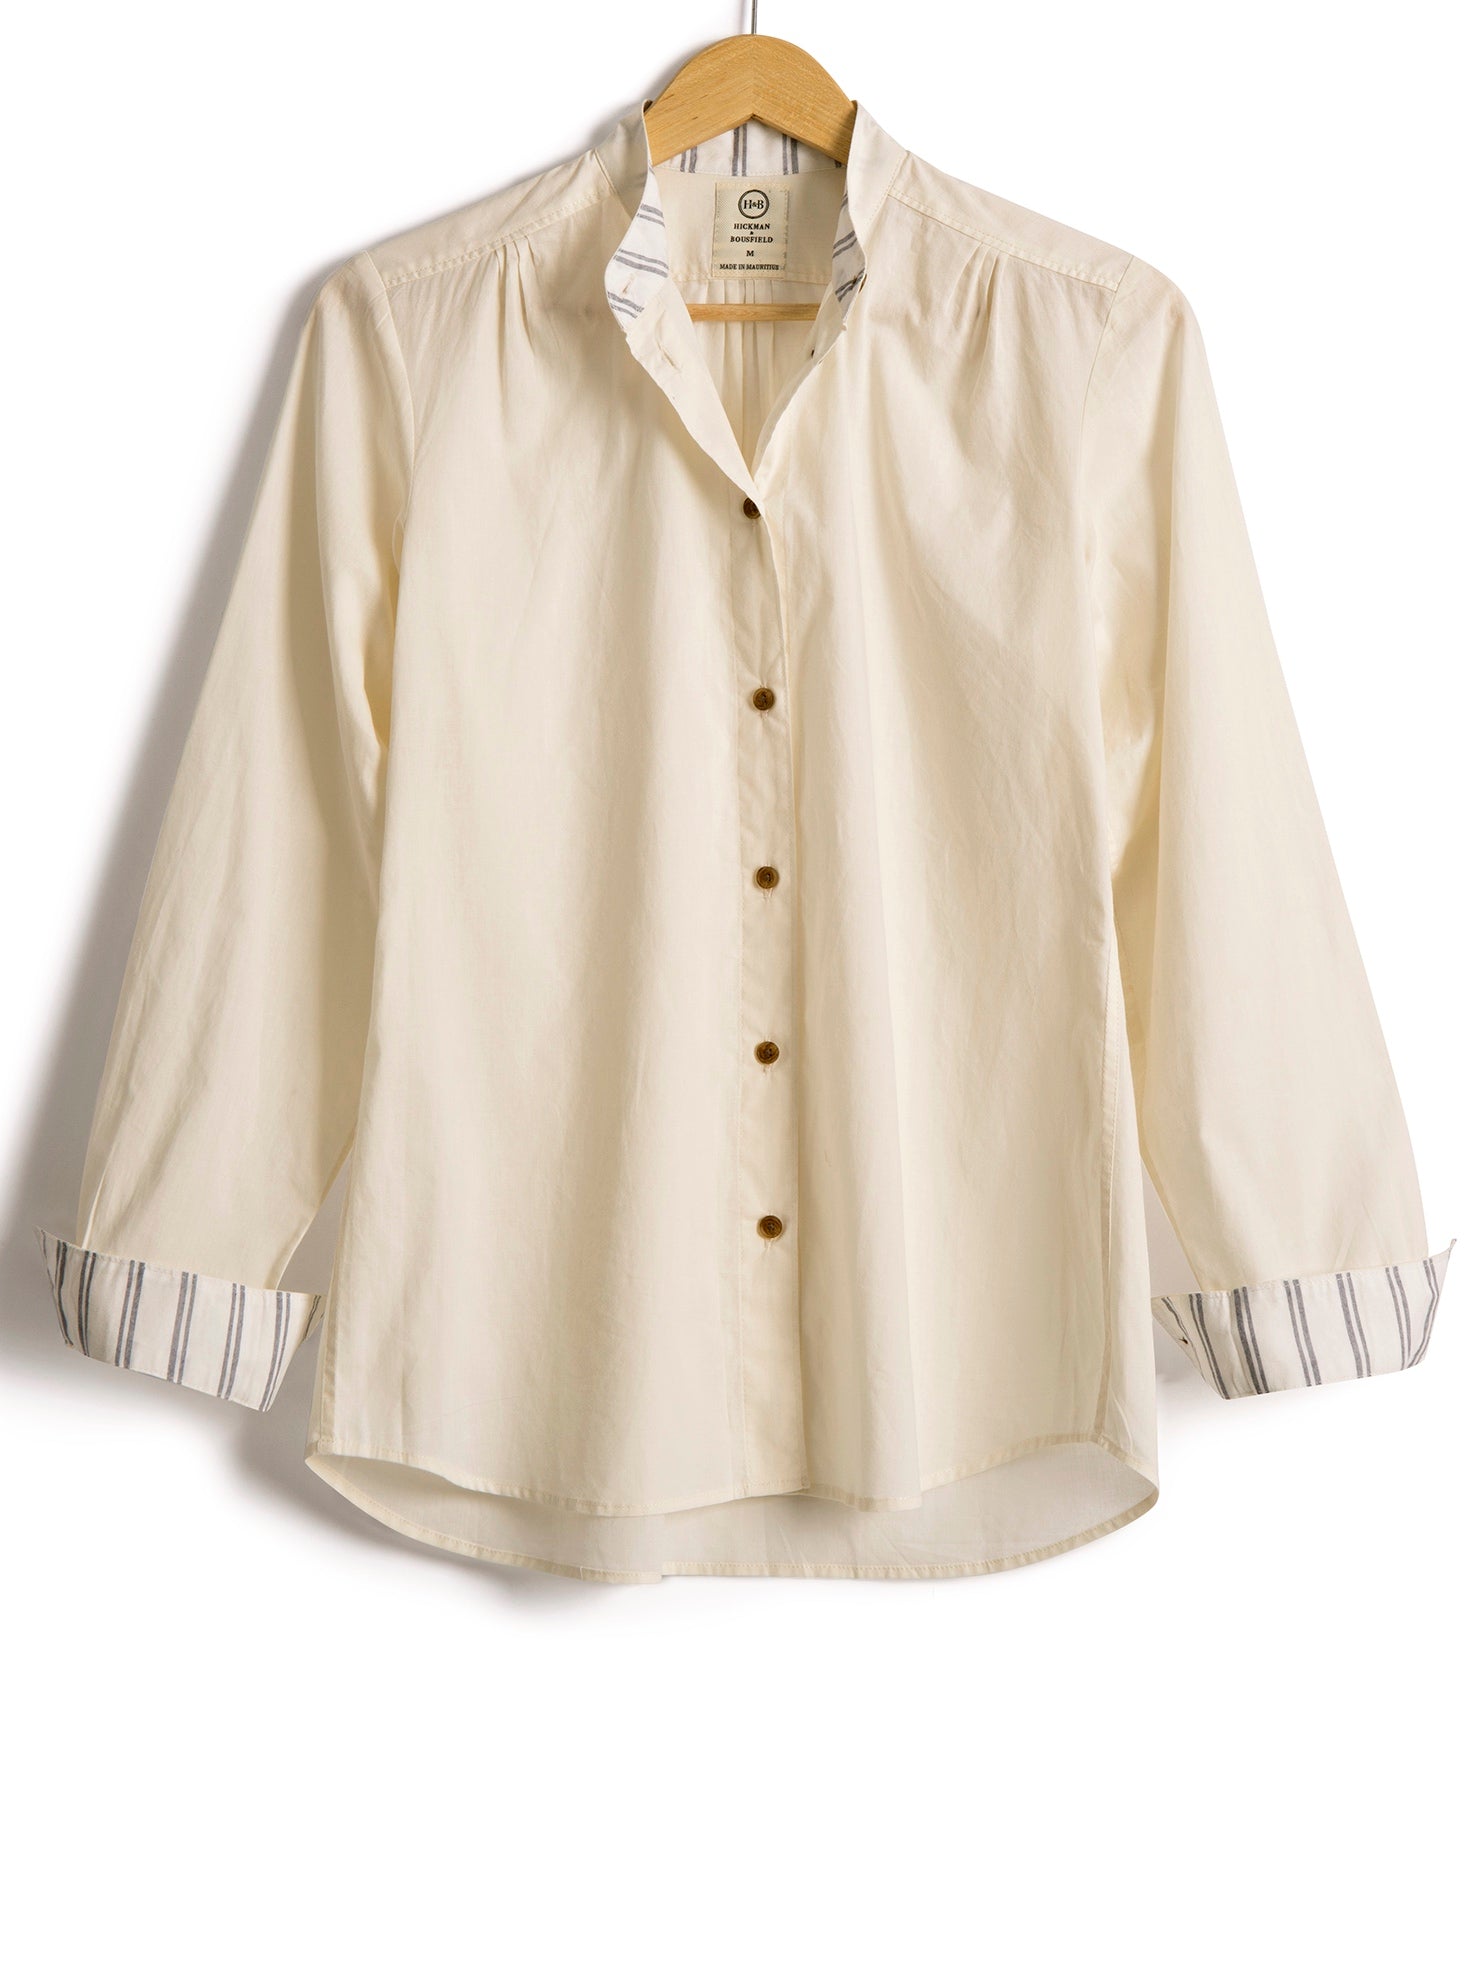 Grandad Shirt in Ivory Cotton,, Shirt, Hickman & Bousfied - Hickman & Bousfield, Safari and Travel Clothing